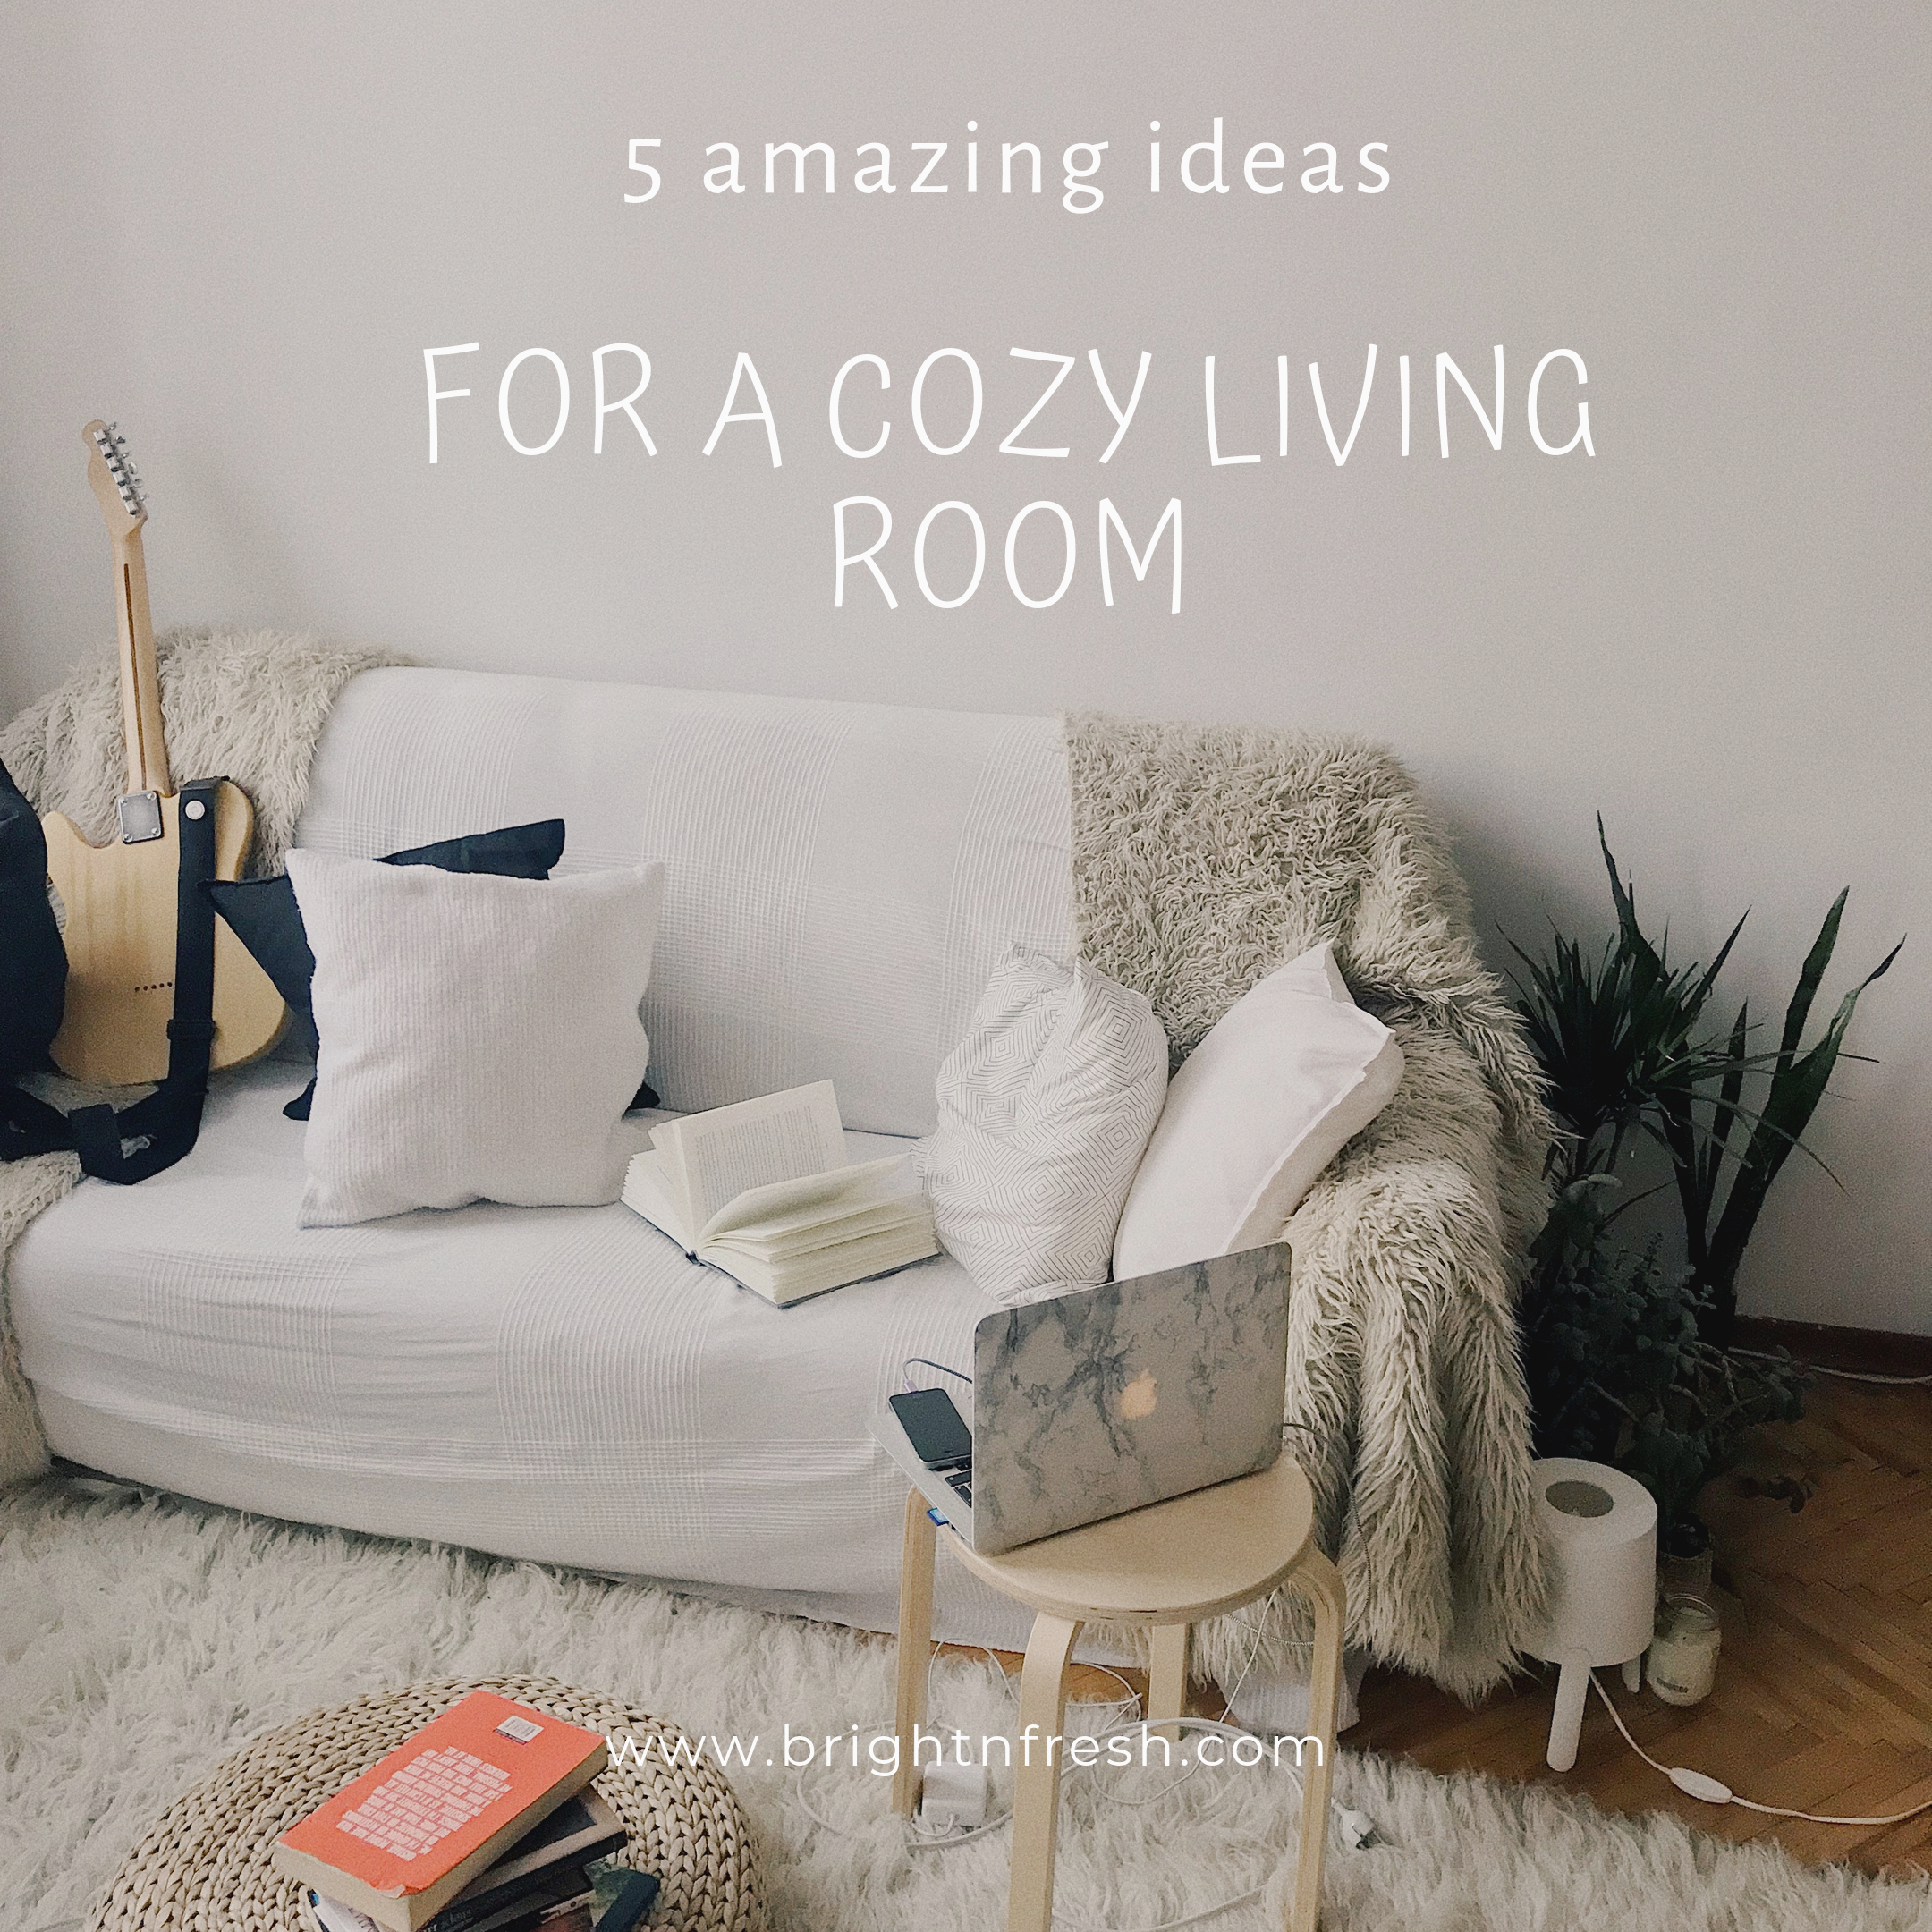 5 Amazing Ideas For a Cozy Living Room — BRIGHT N FRESH LOS ANGELES